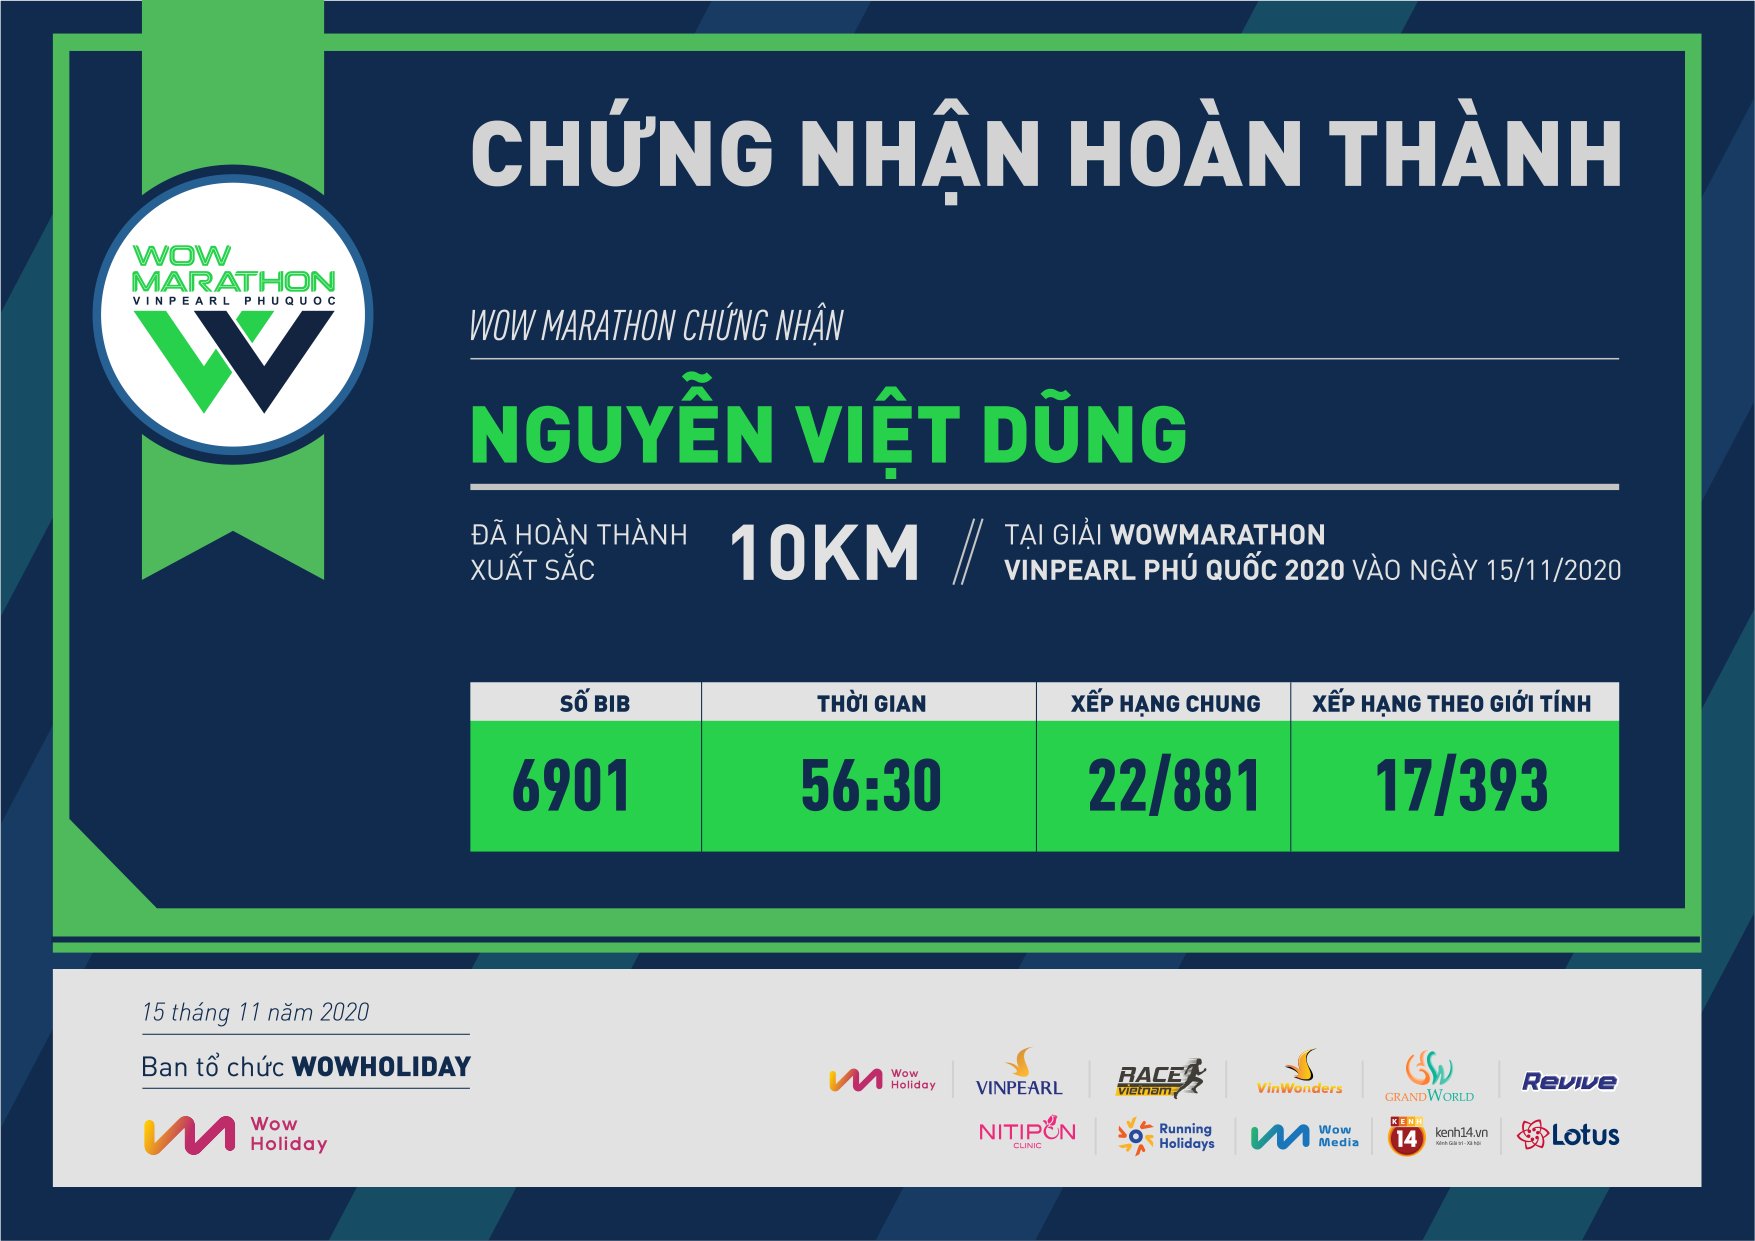 6901 - Nguyễn Việt Dũng